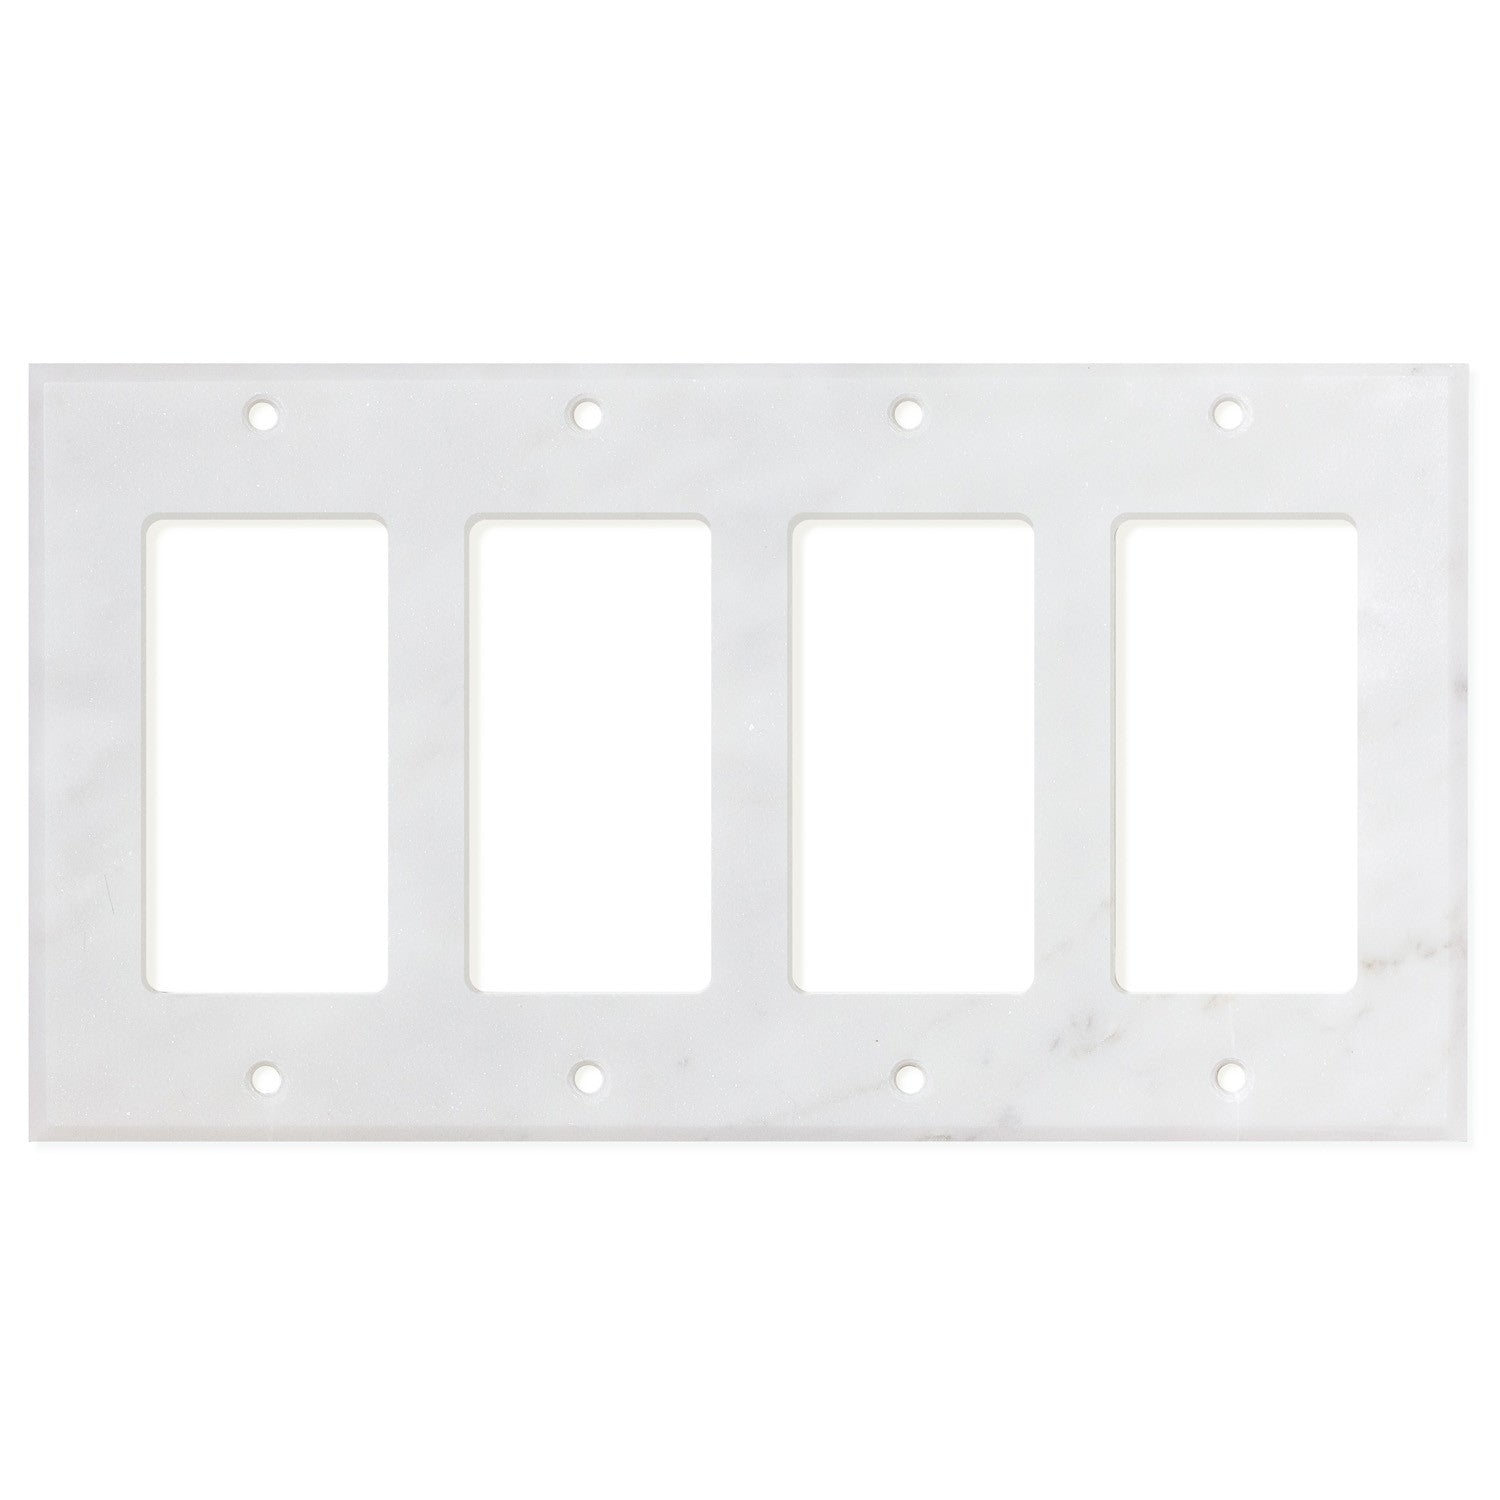 Bianco Carrara (Carrara White) Marble Switch Plate Cover, Polished (4 ROCKER) - Tilephile